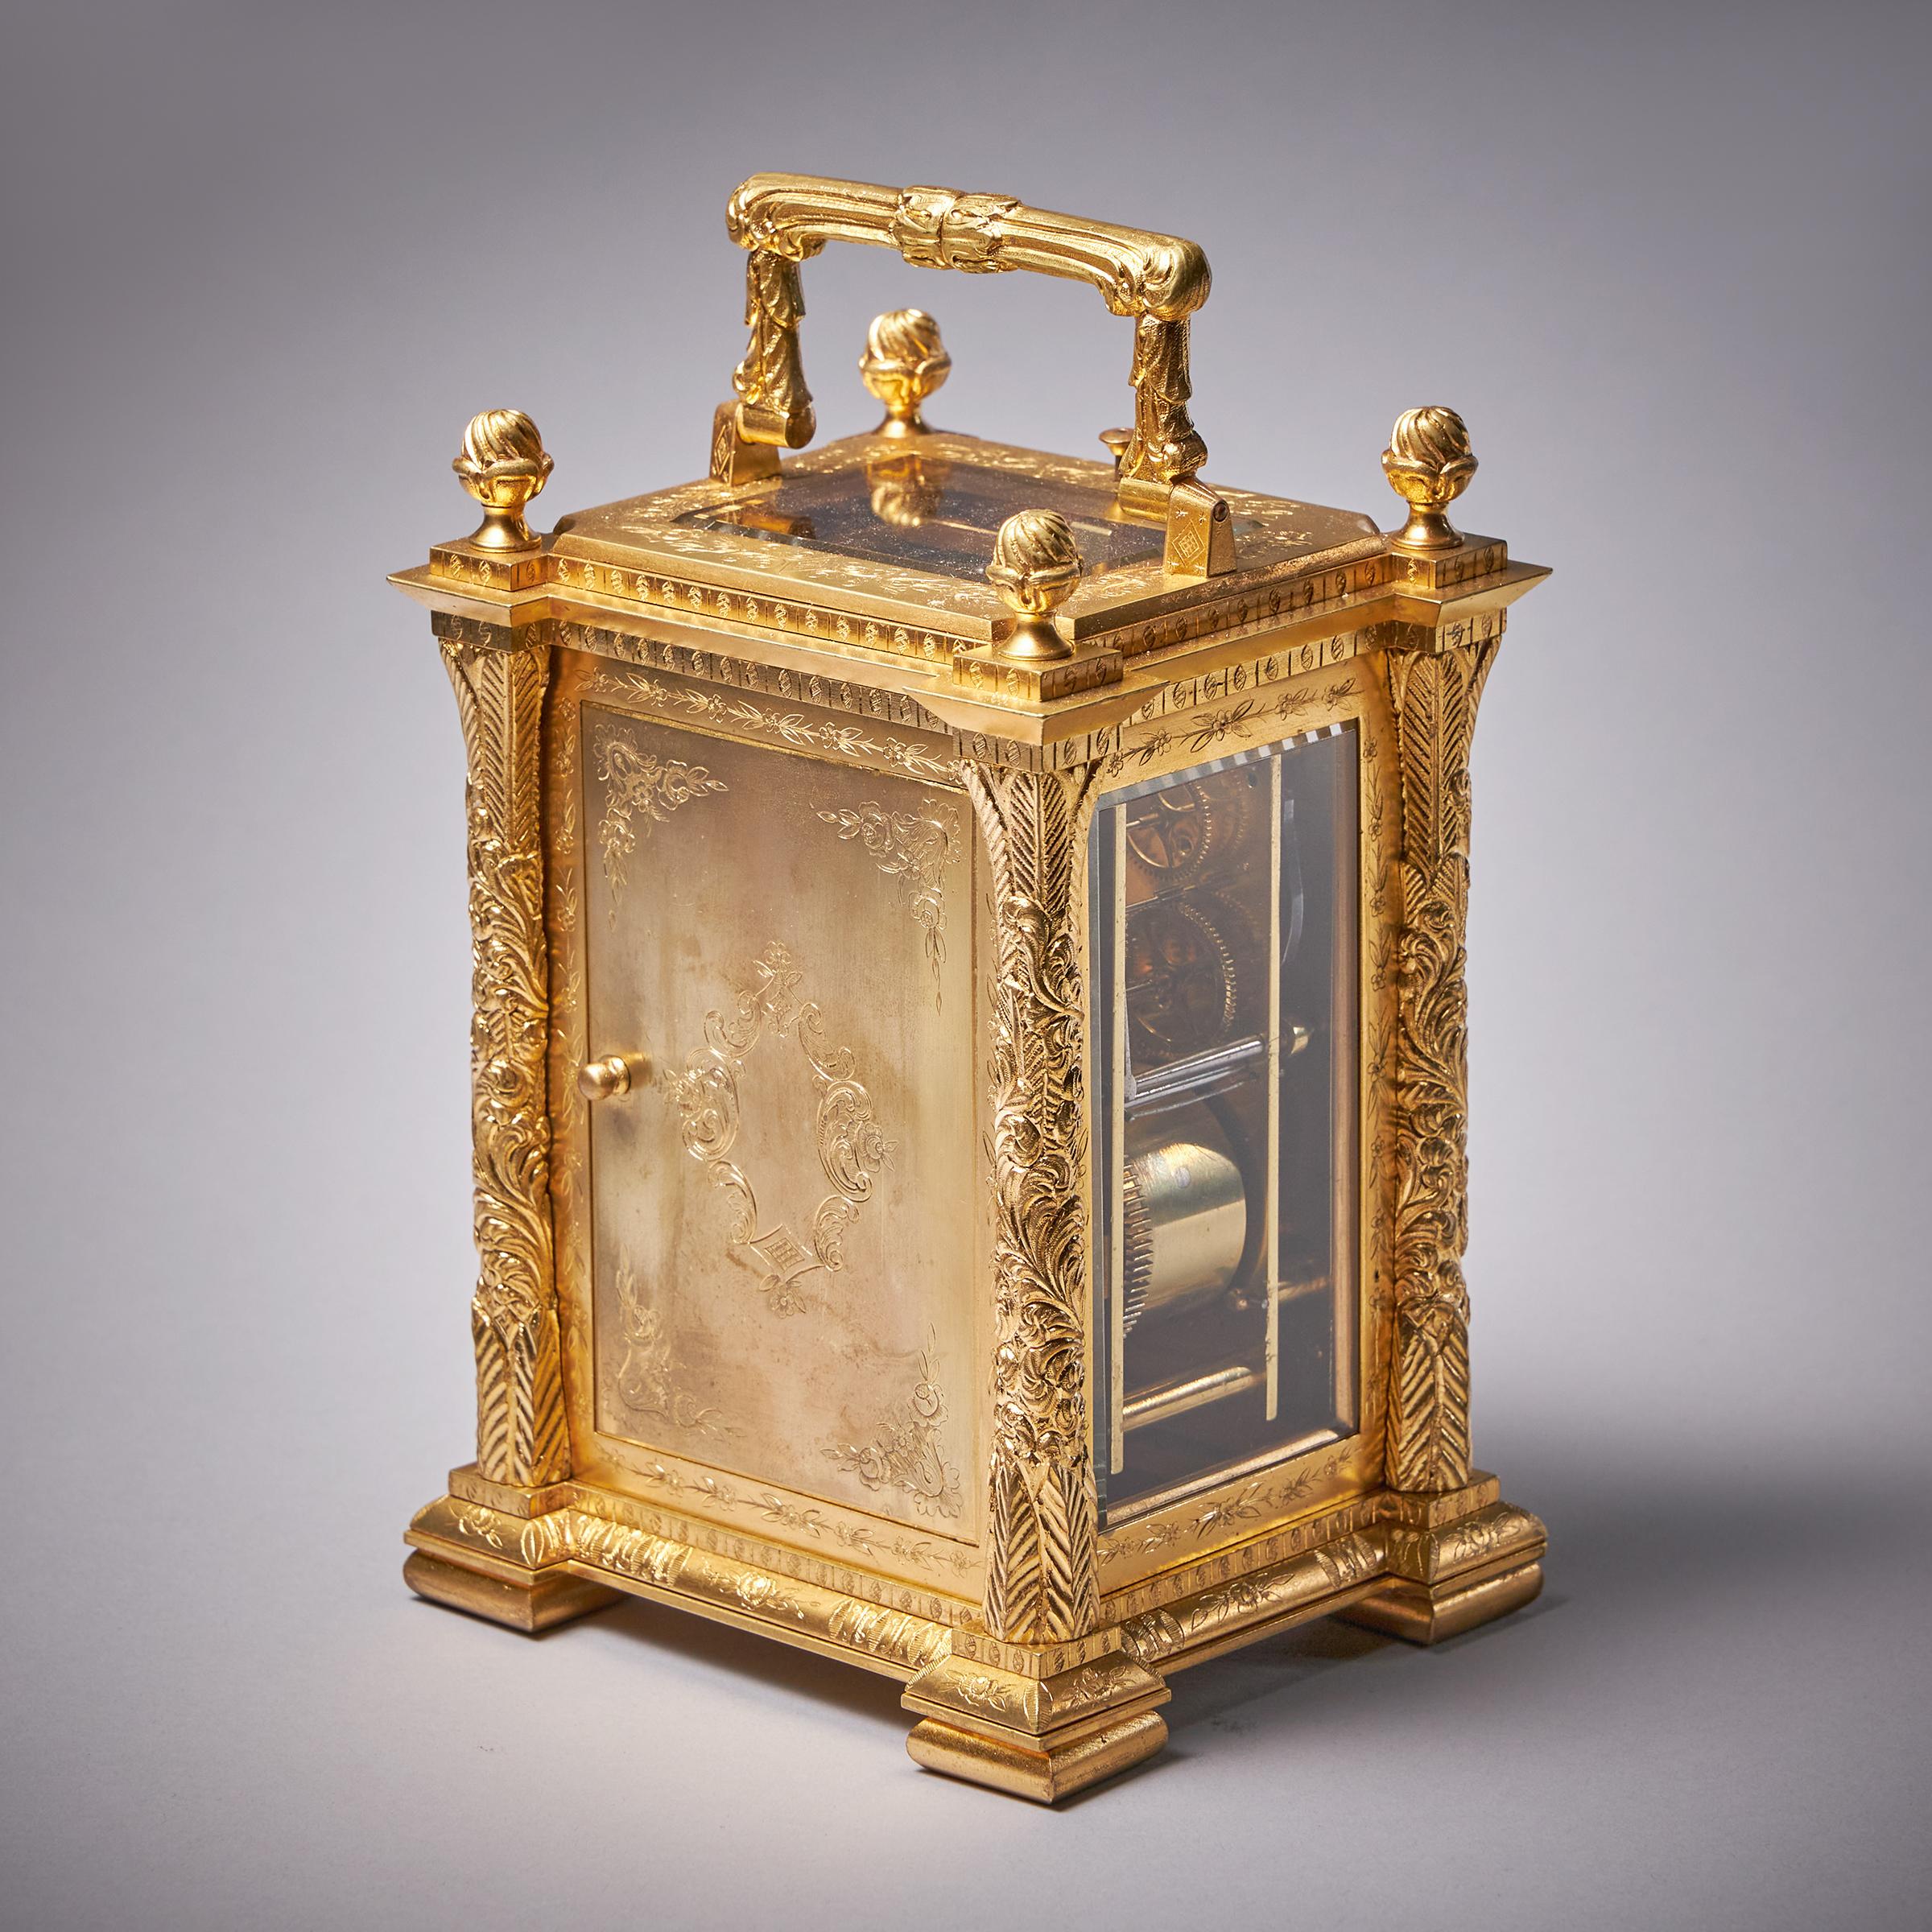 19th Century Eight Day Gilt Brass Carriage Clock with Alarm by Orange, Paris 1